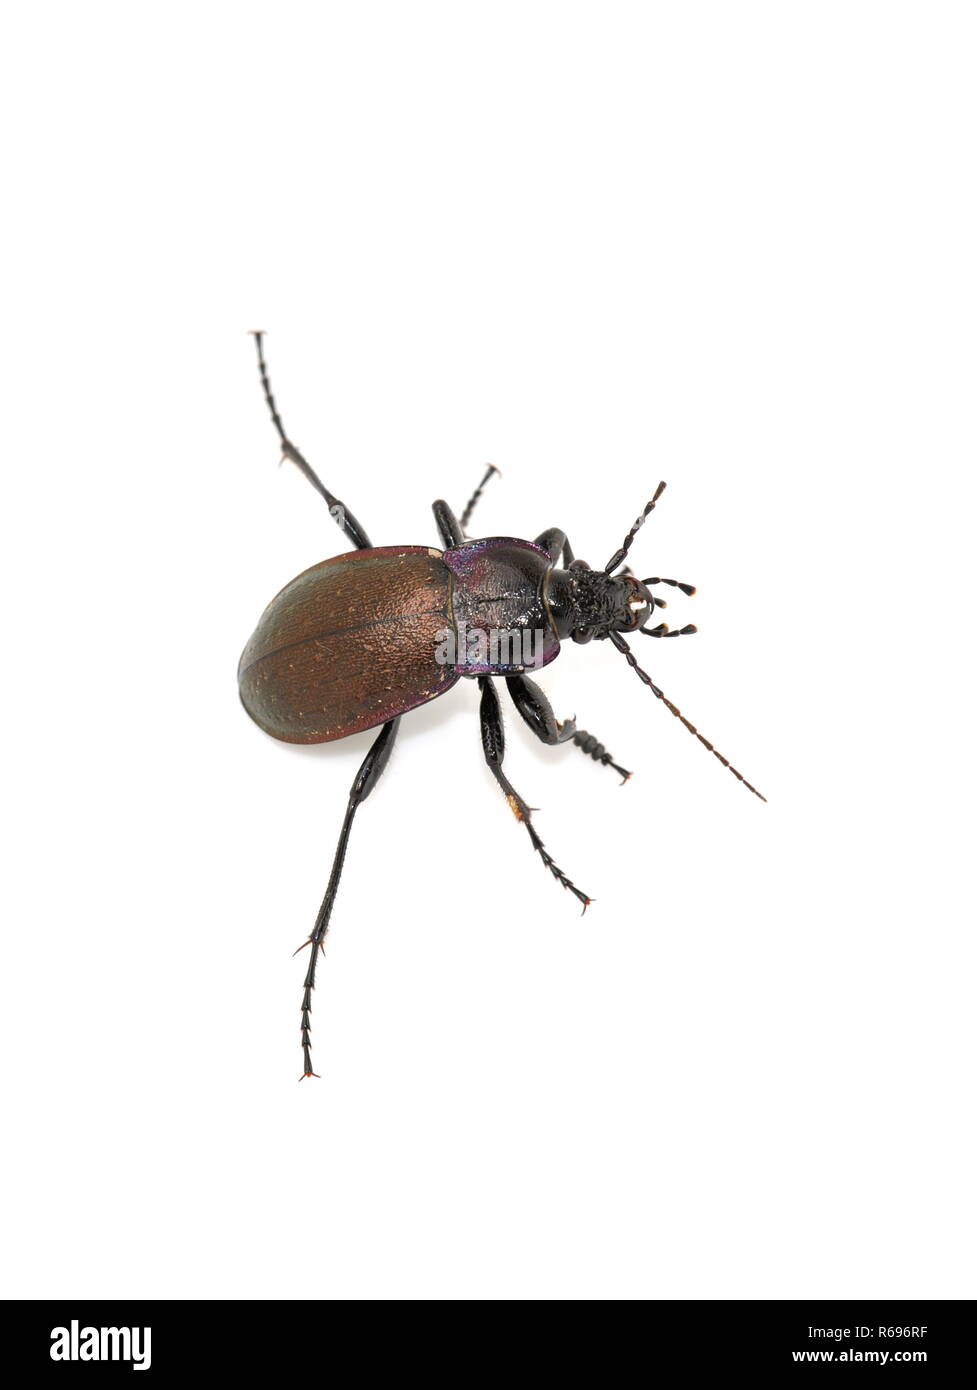 The ground beetle Carabus nemoralis on white background Stock Photo